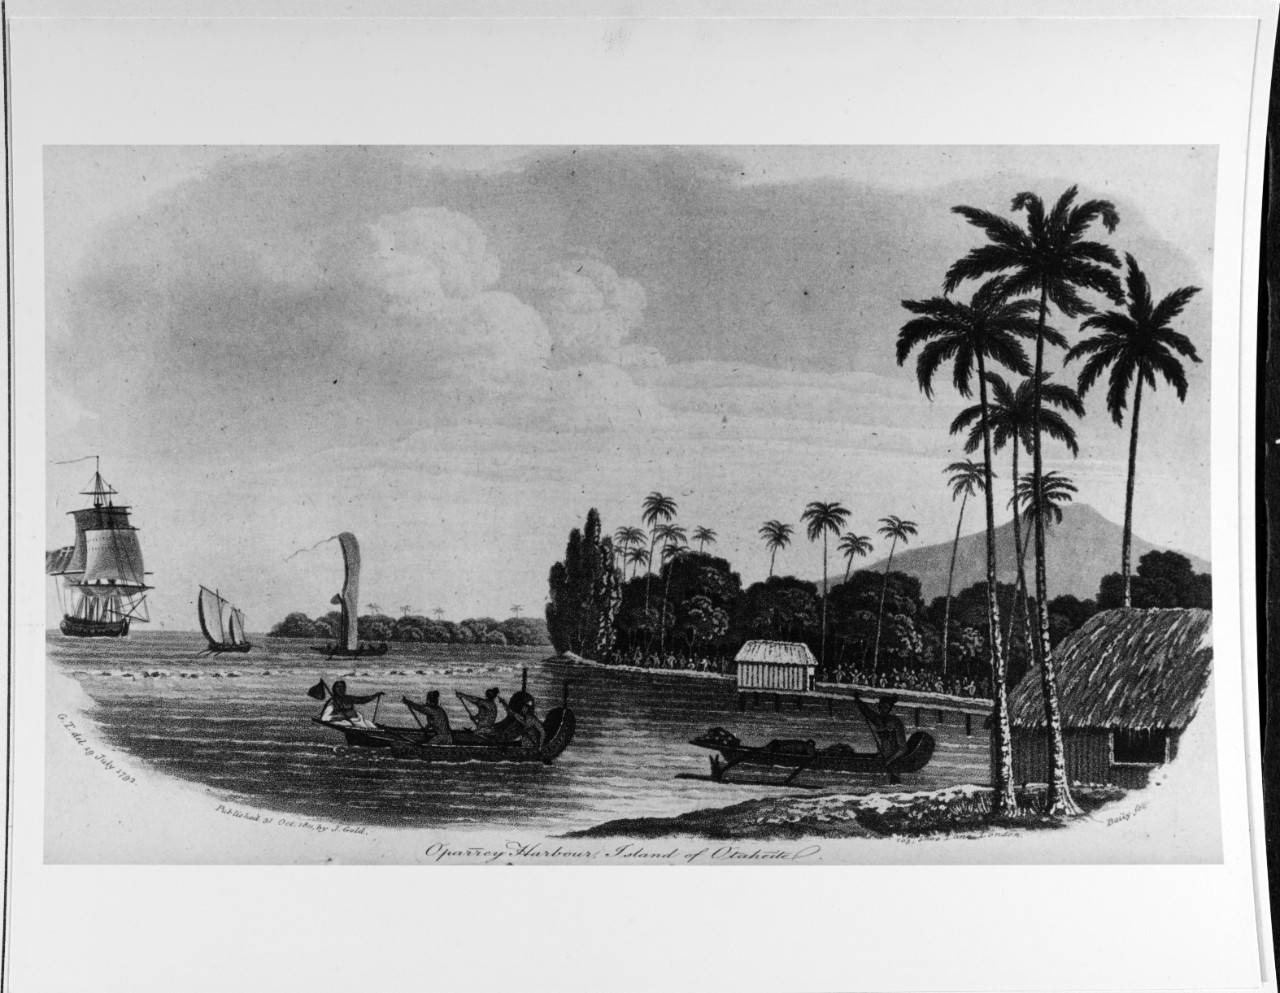 "Oparrey Harbour, Island of Otaheite," Society Islands.